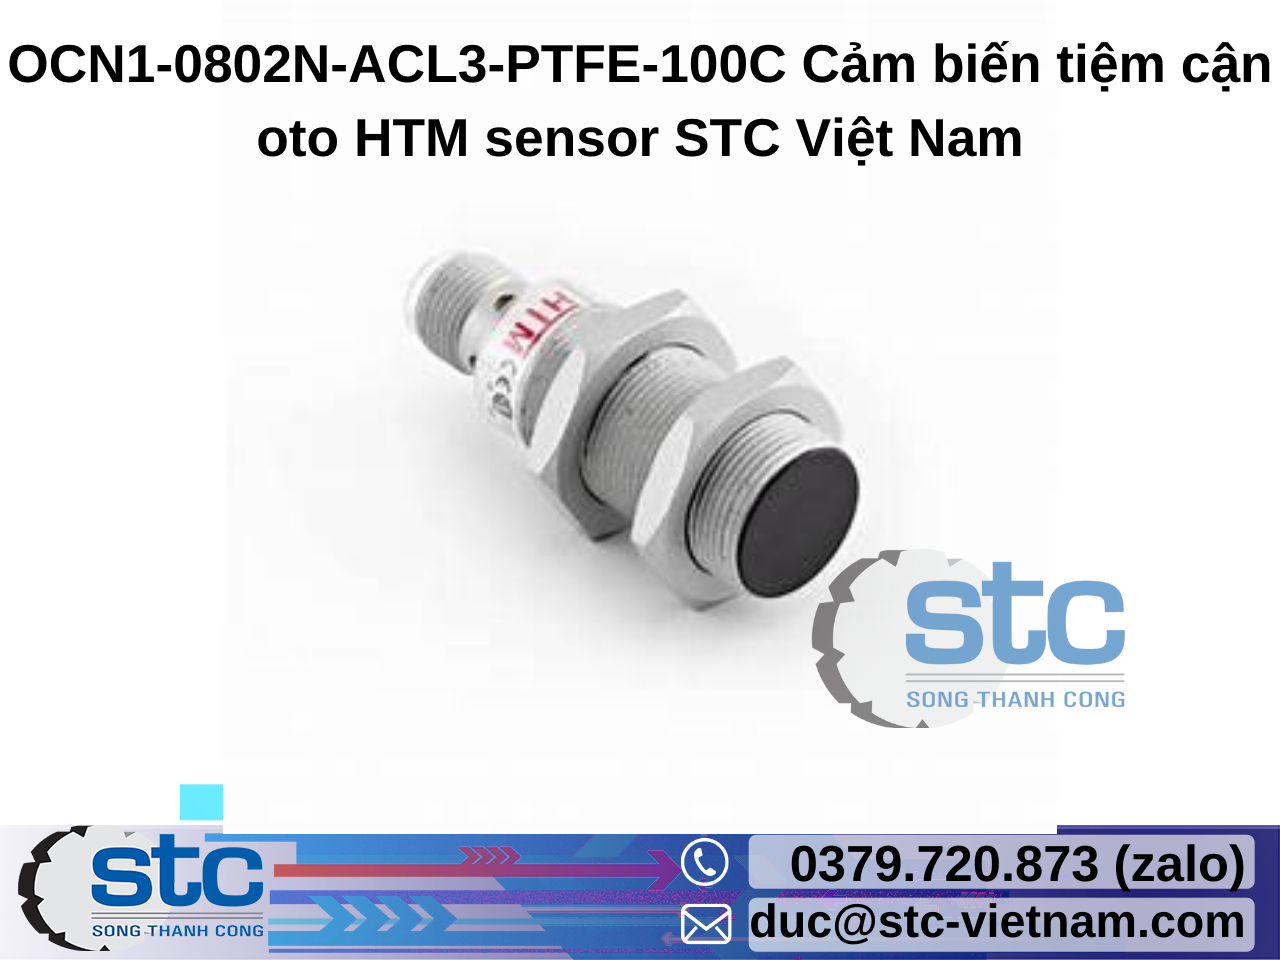 ocn1-0802n-acl3-ptfe-100c-cam-bien-tiem-can-oto-htm-sensor.png